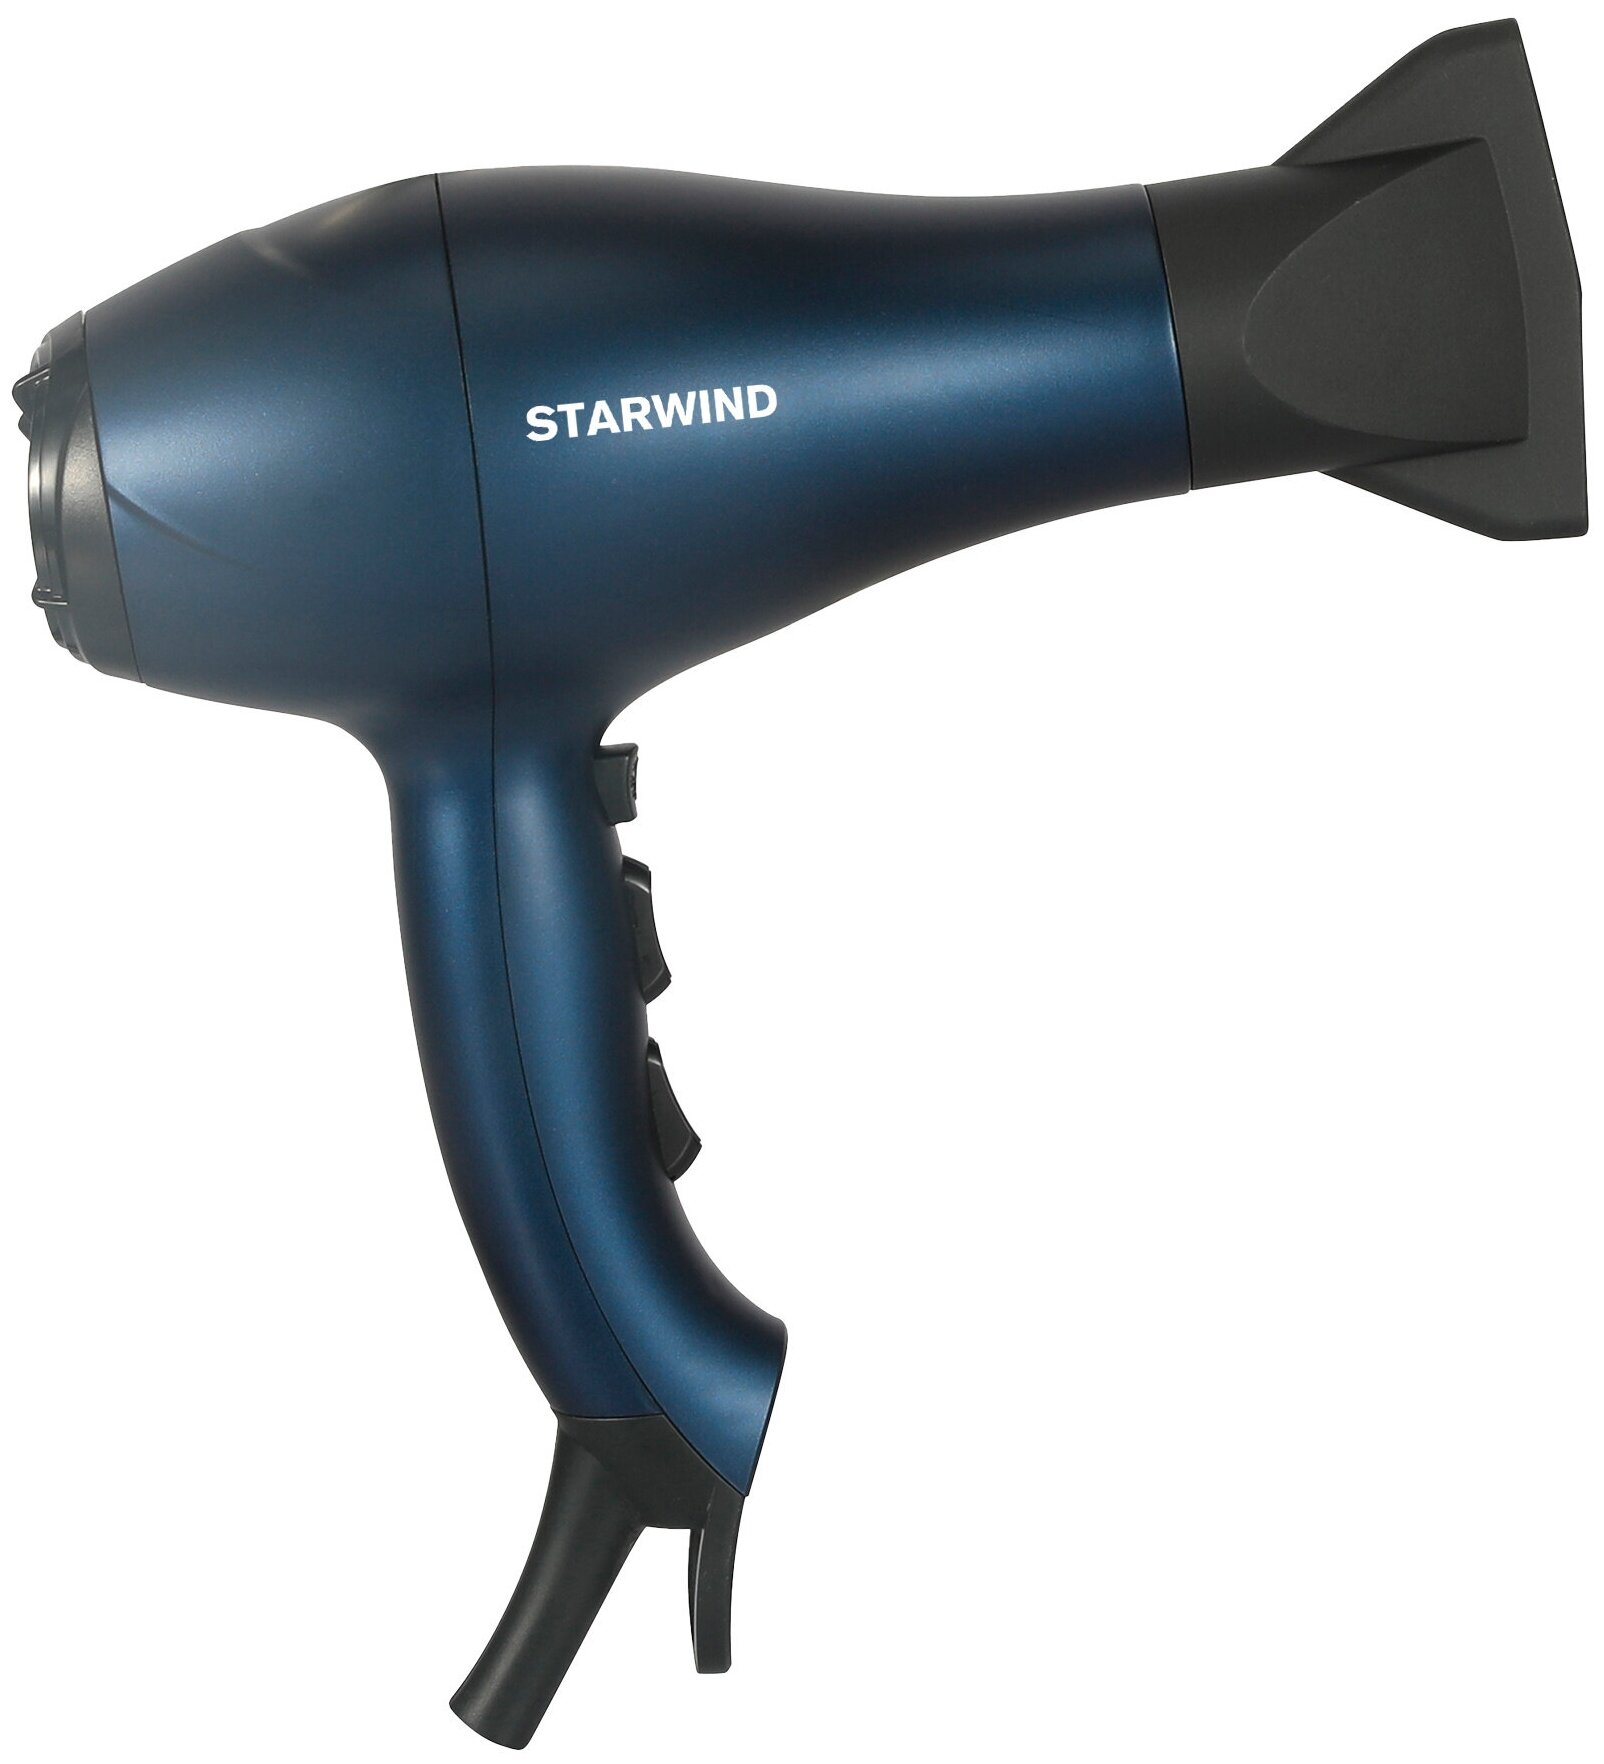 Фен Starwind SHD 6062 1800Вт черный/синий - фото 1